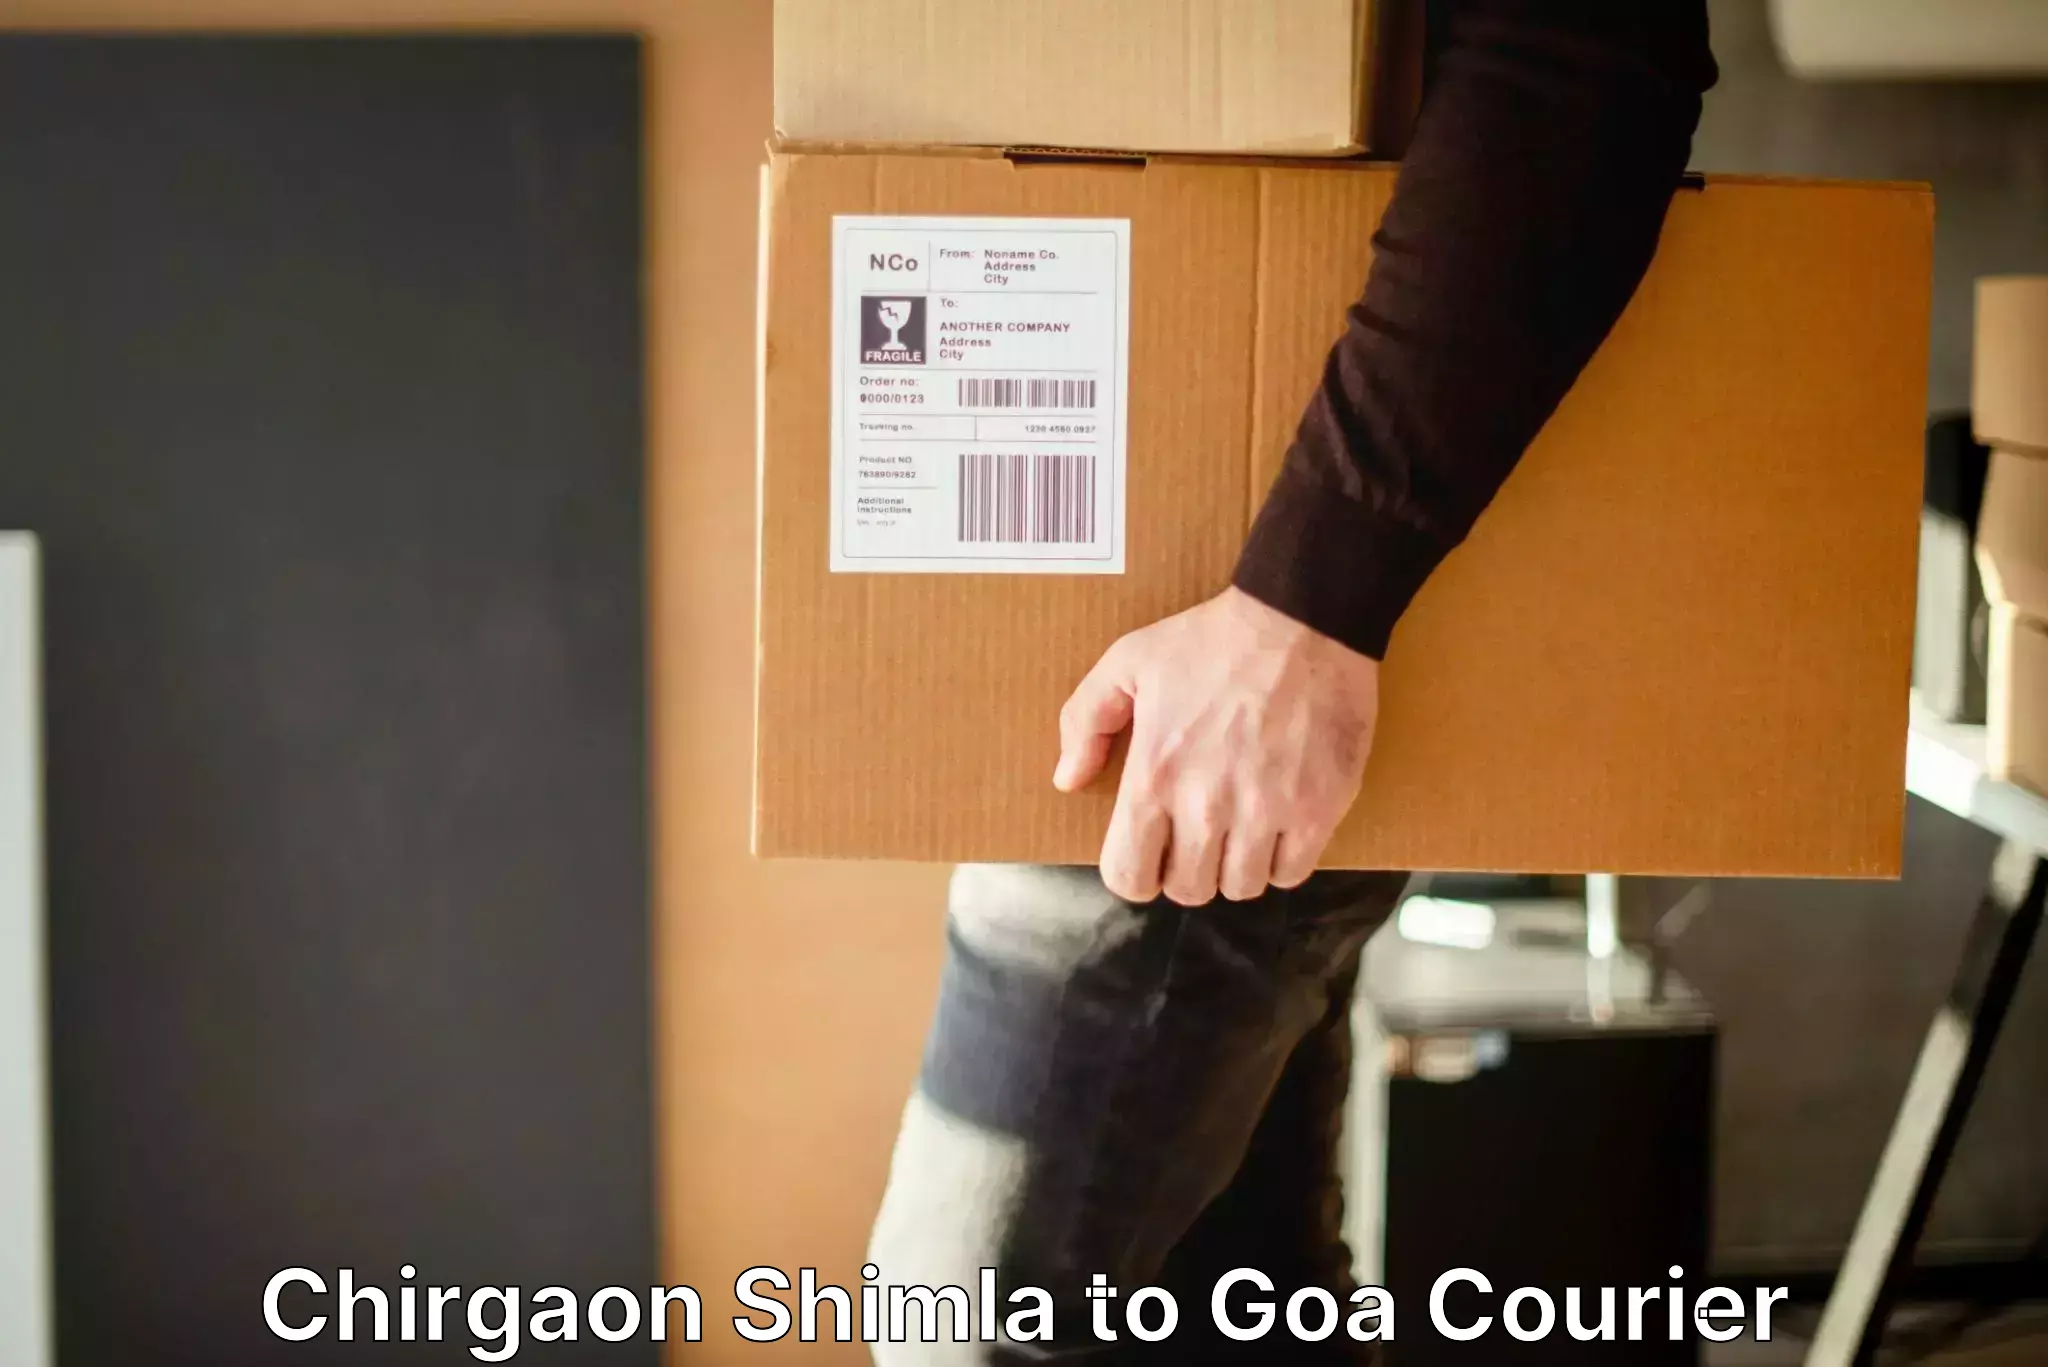 Baggage transport professionals Chirgaon Shimla to Goa